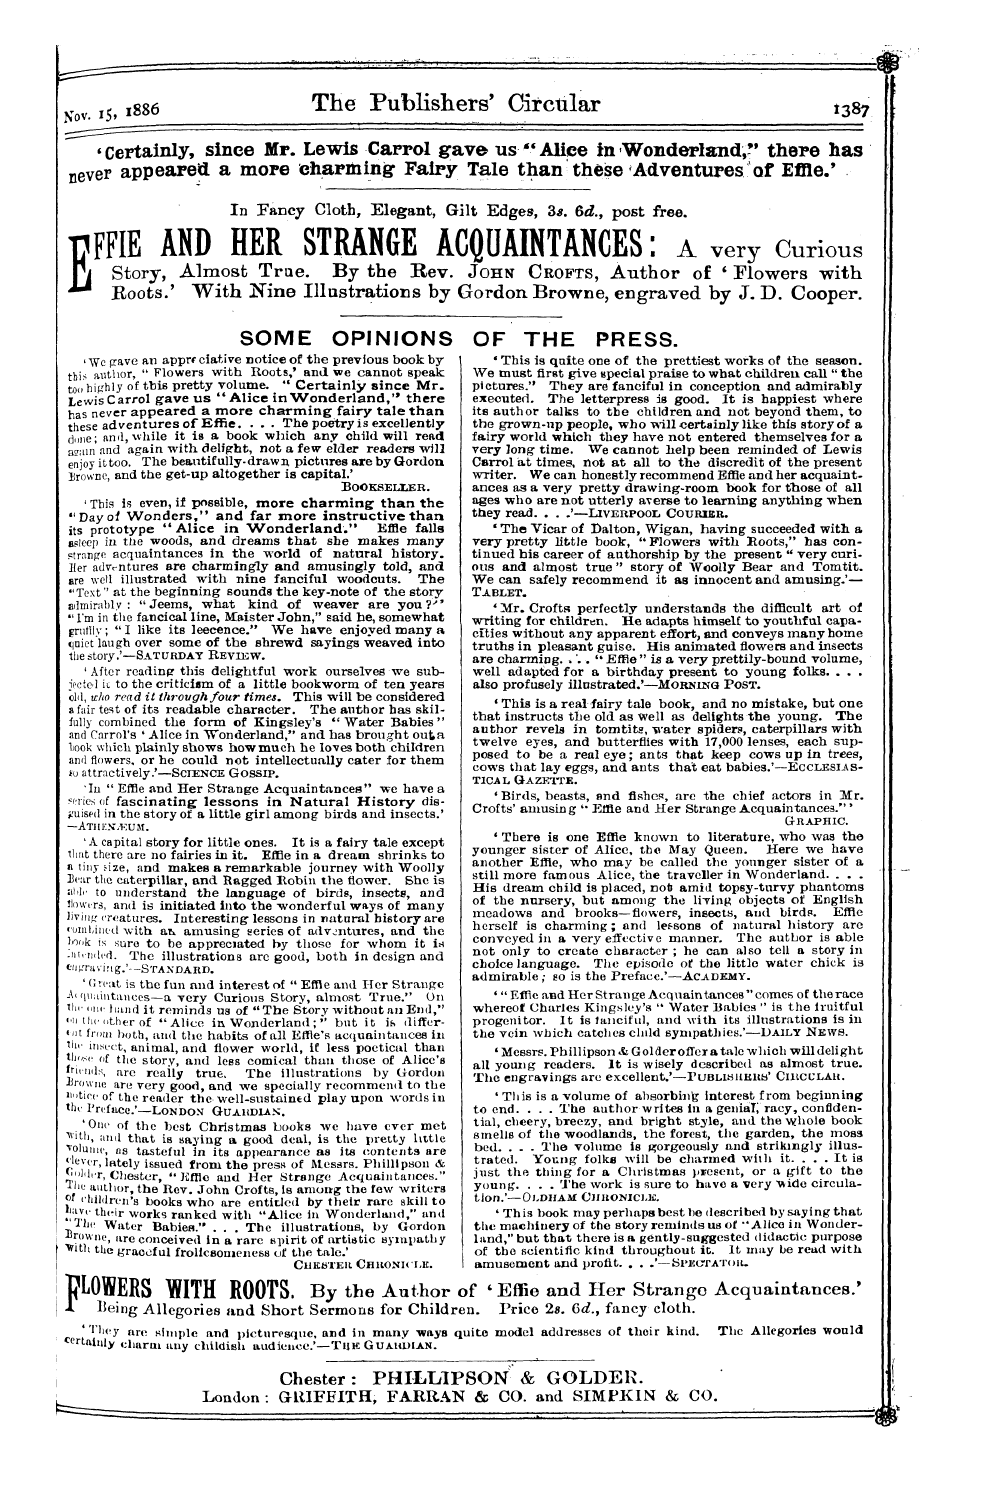 Publishers’ Circular (1880-1890): jS F Y, 1st edition: 29